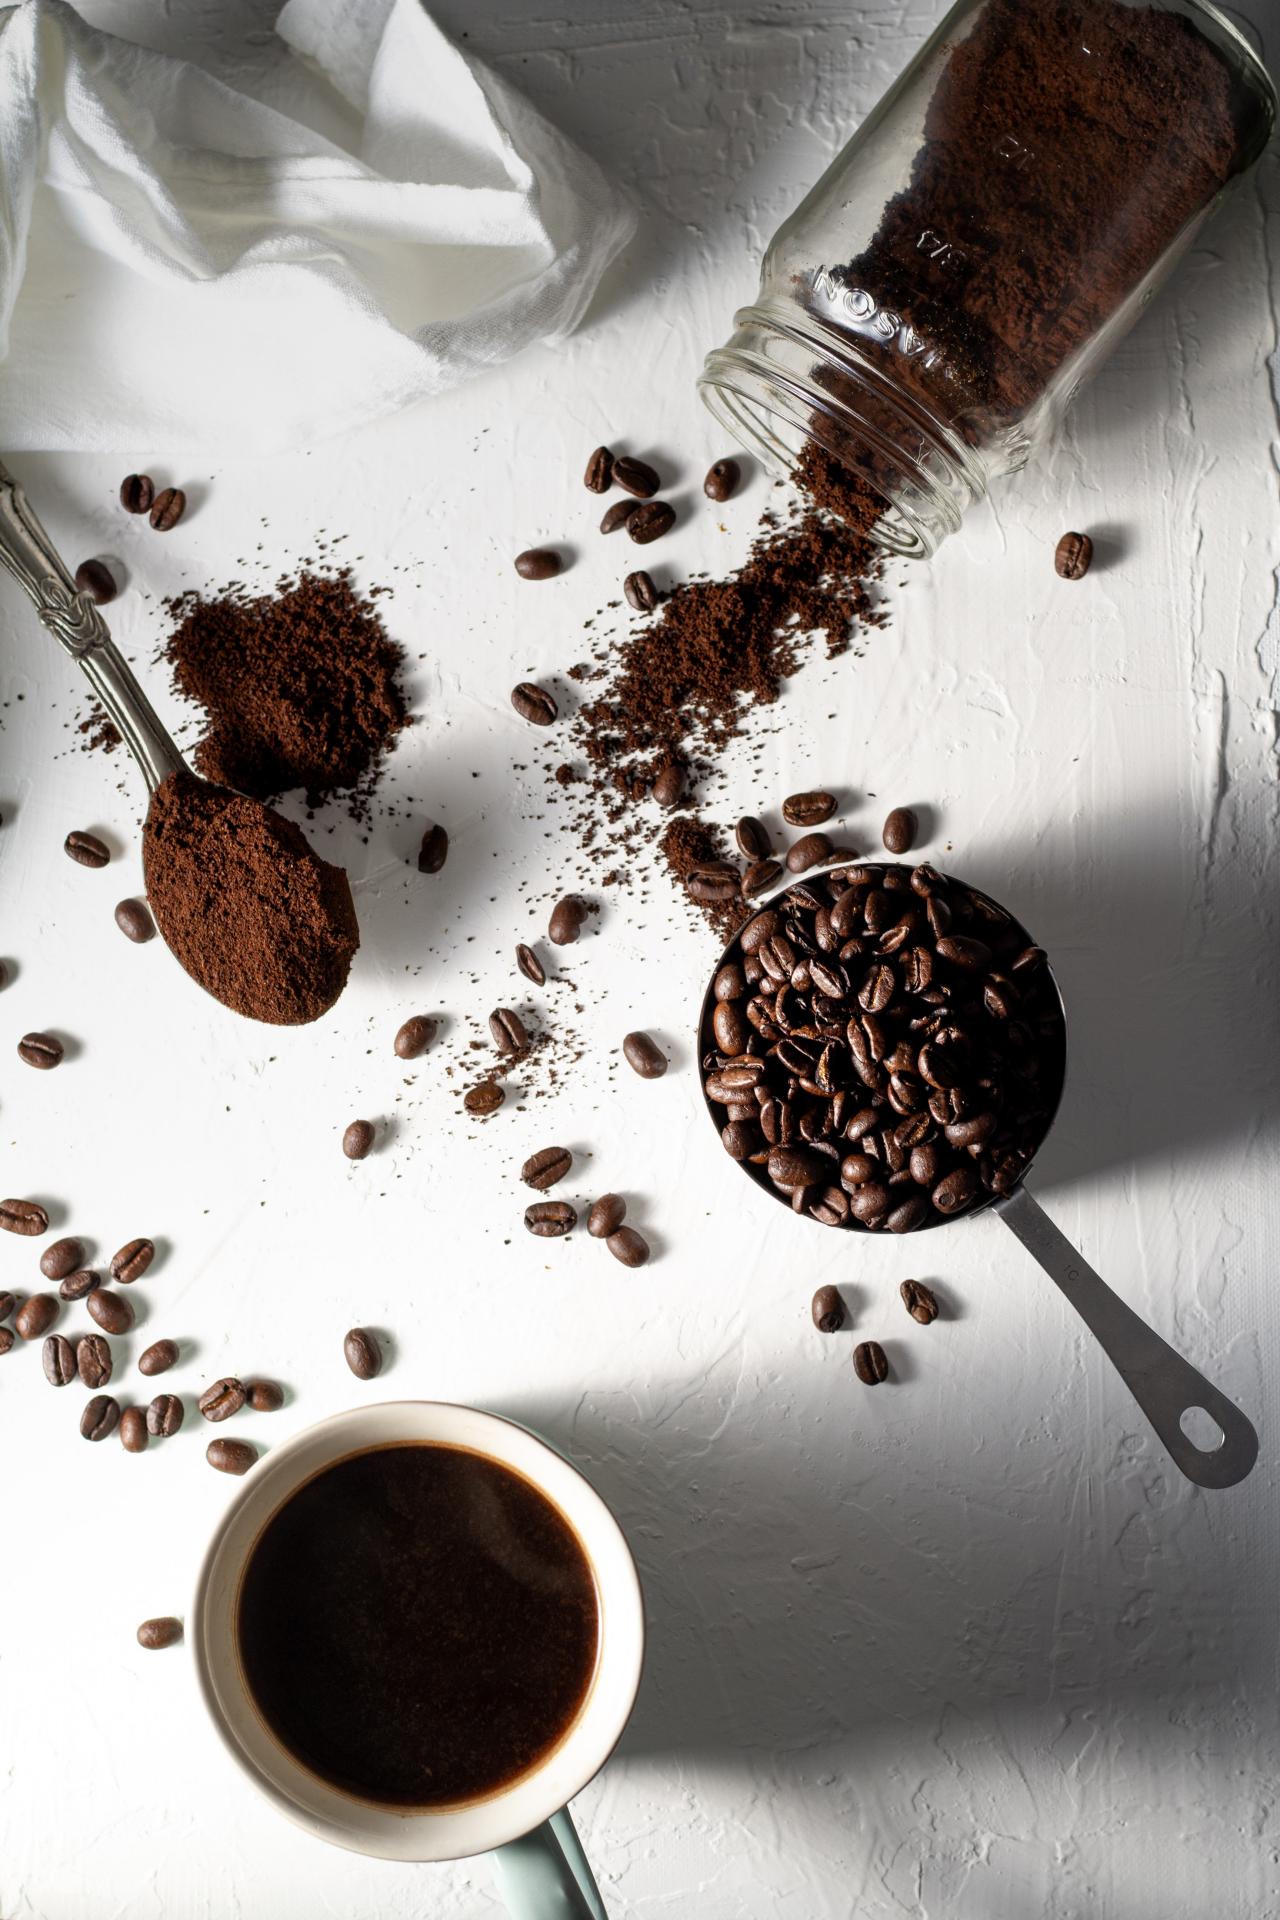 Operadores de café robusta están nerviosos ante escasez y aumento de precios